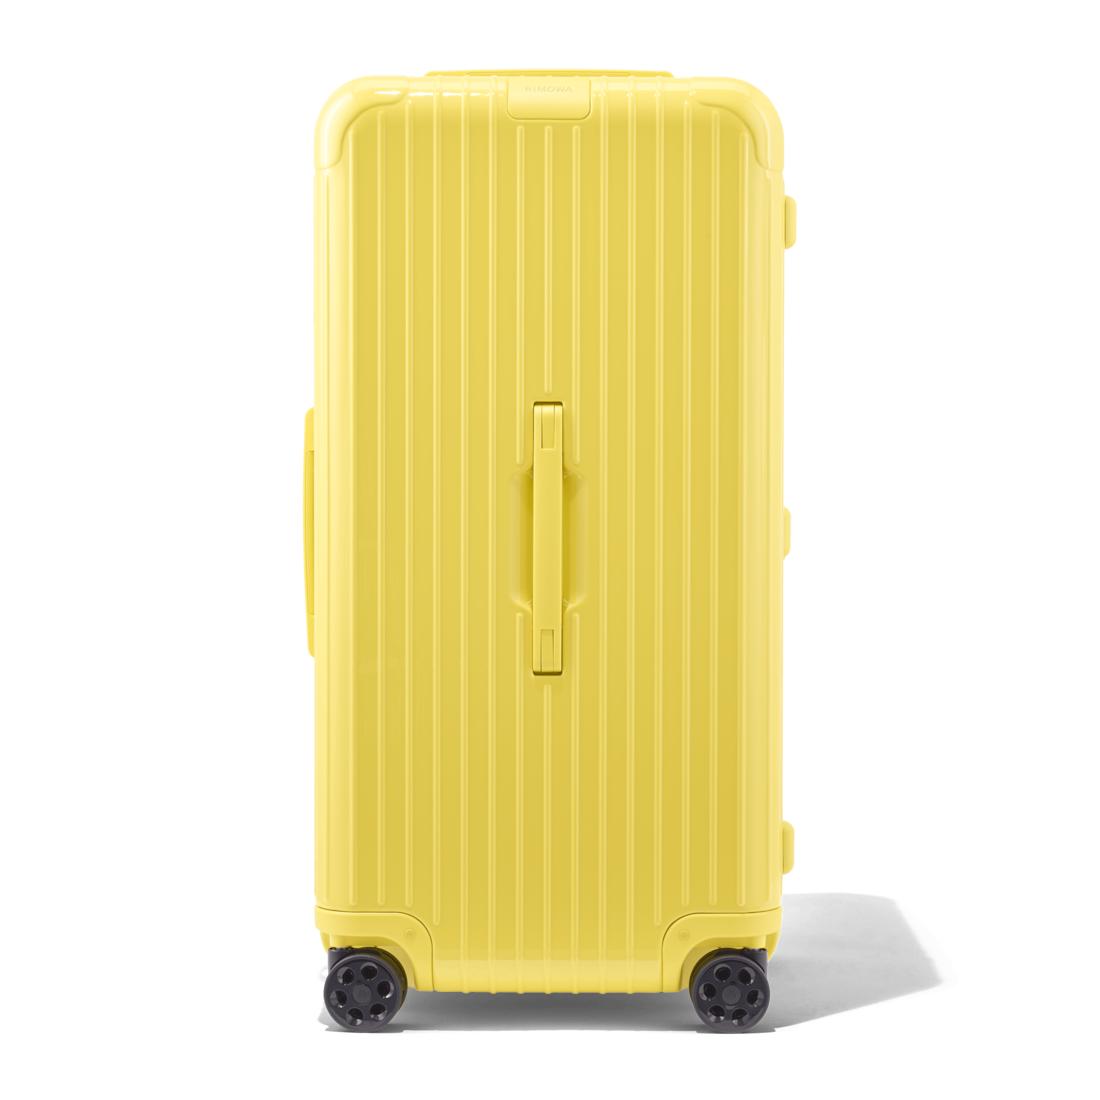 RIMOWA Essential Trunk Plus Suitcase in Blue